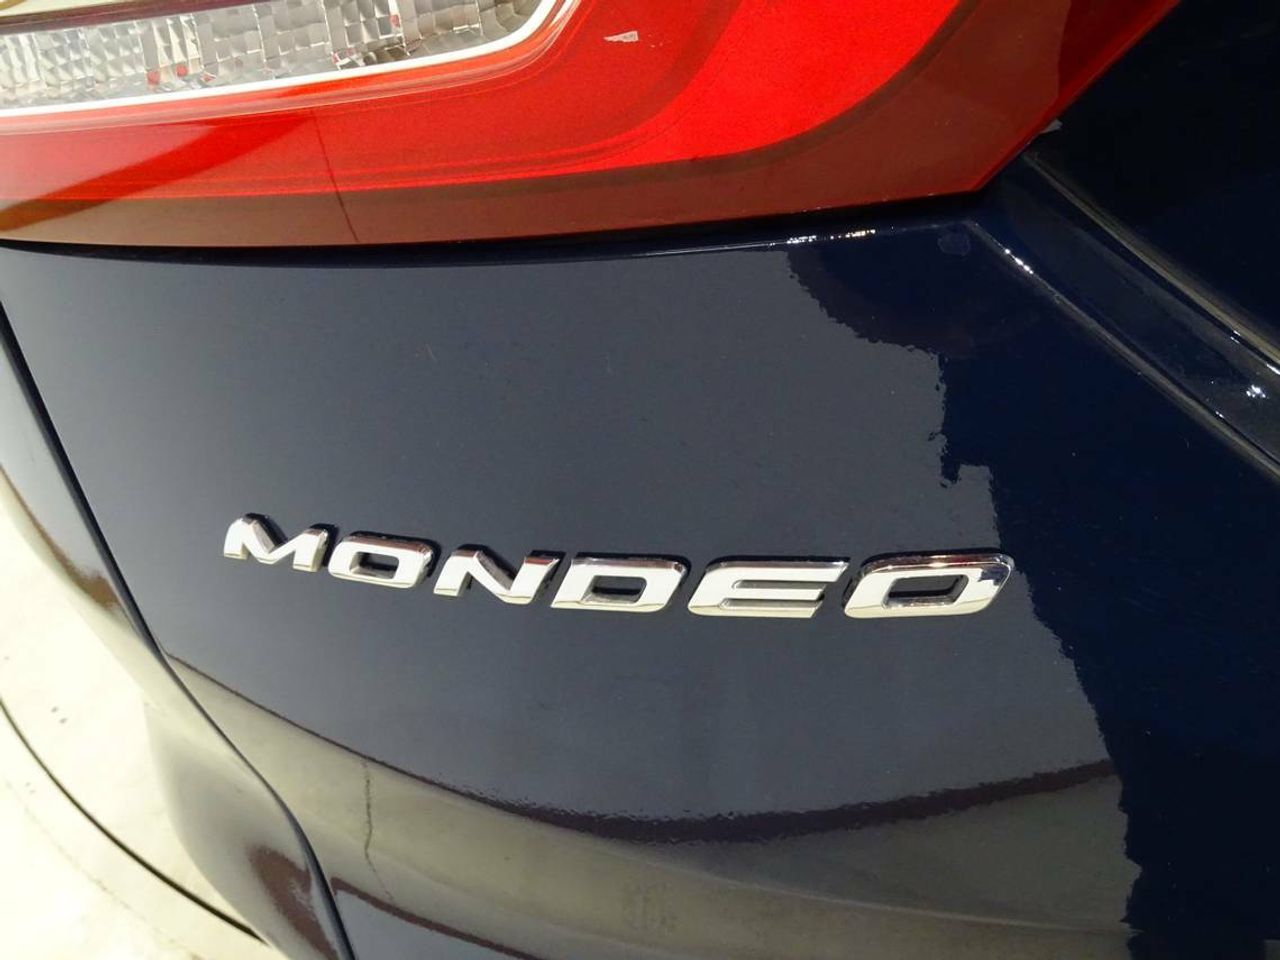 Ford Mondeo Trend 2.0 TDCi 150CV   SportBreak  - Foto 2